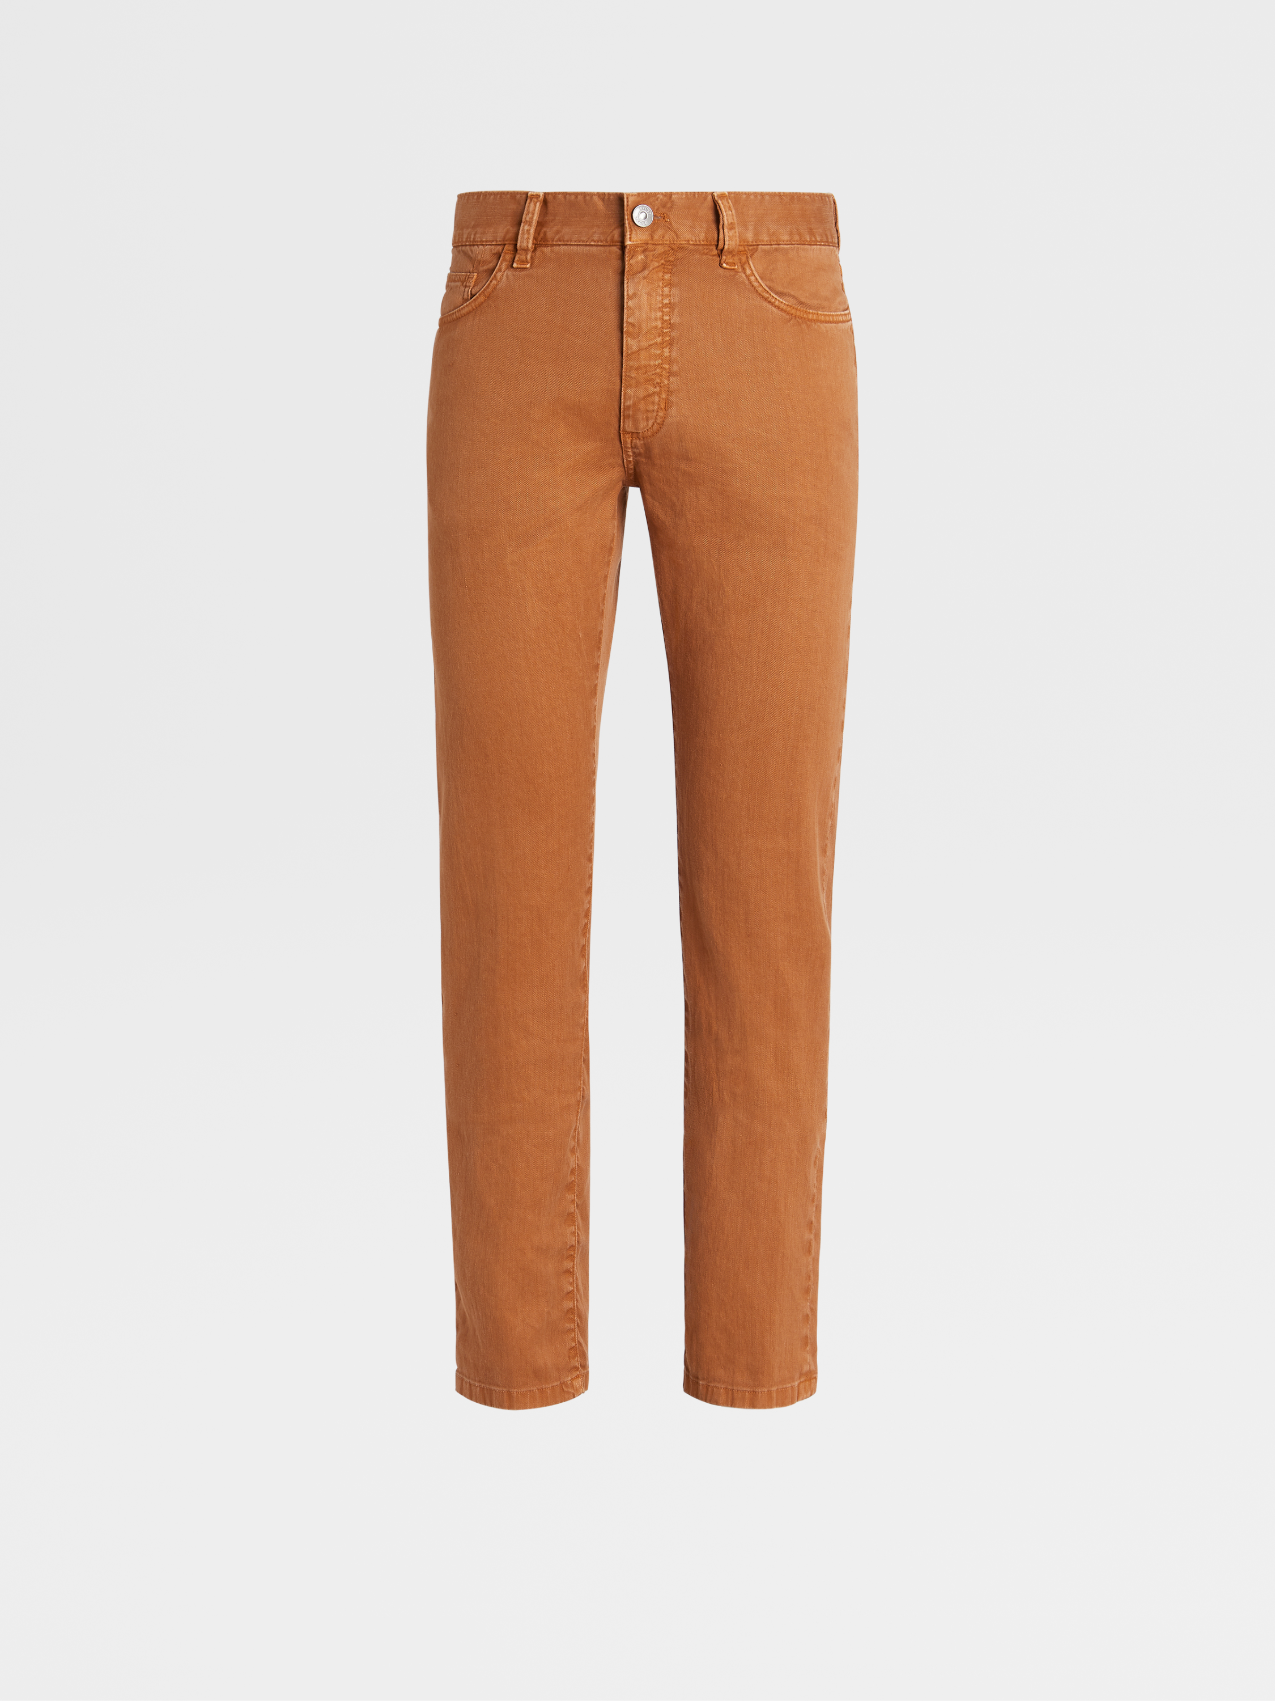 Orange Garment Dyed Stretch Linen and Cotton 5-Pocket Jeans